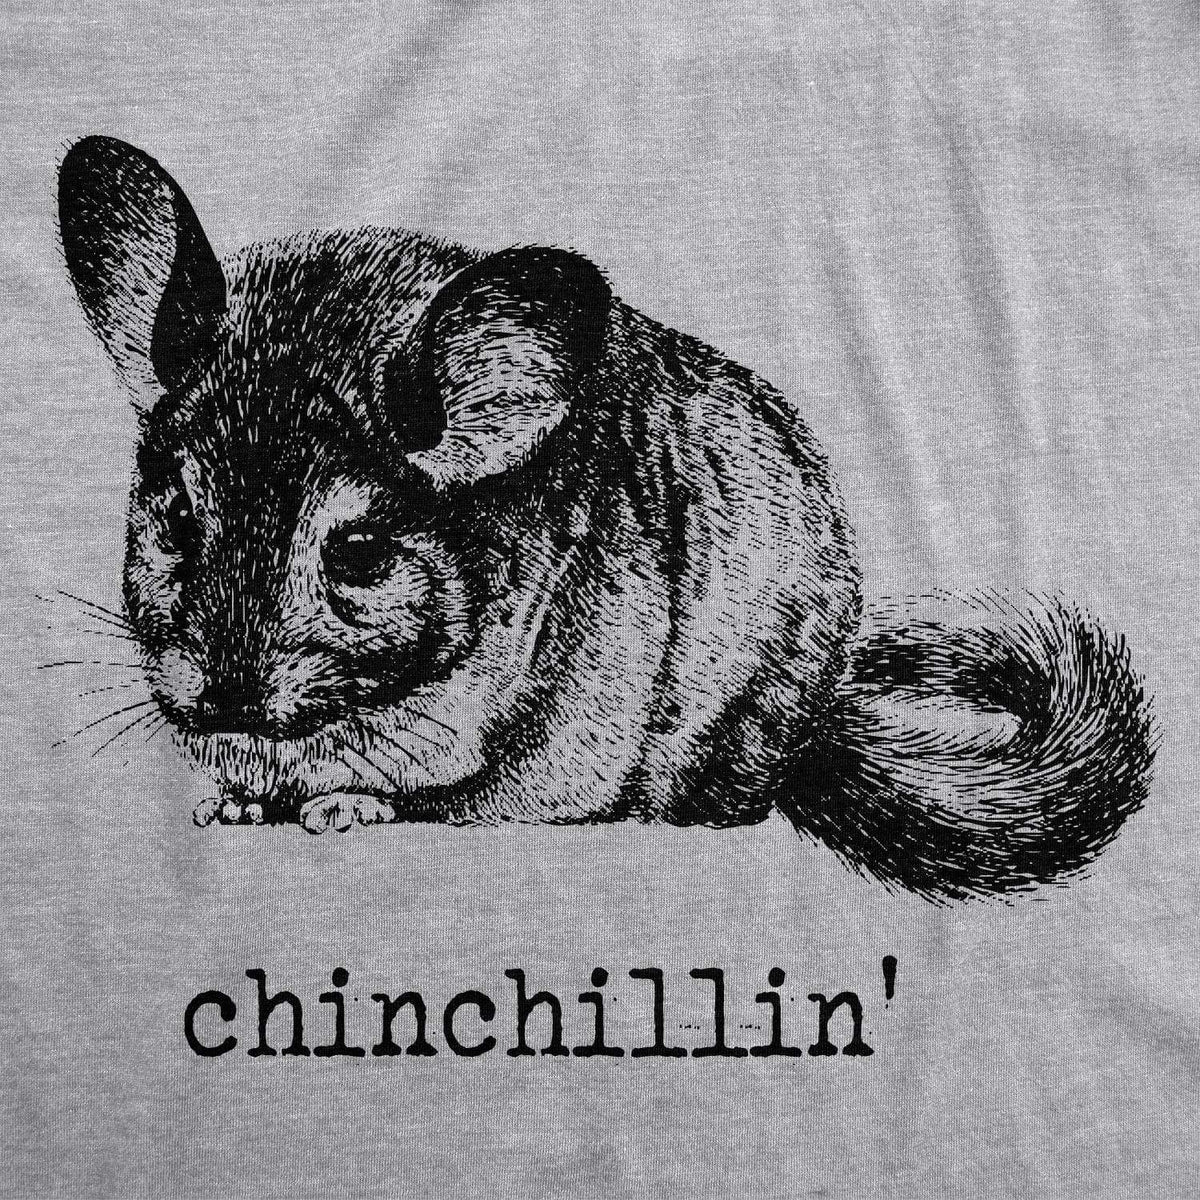 Chinchillin Men&#39;s Tshirt - Crazy Dog T-Shirts